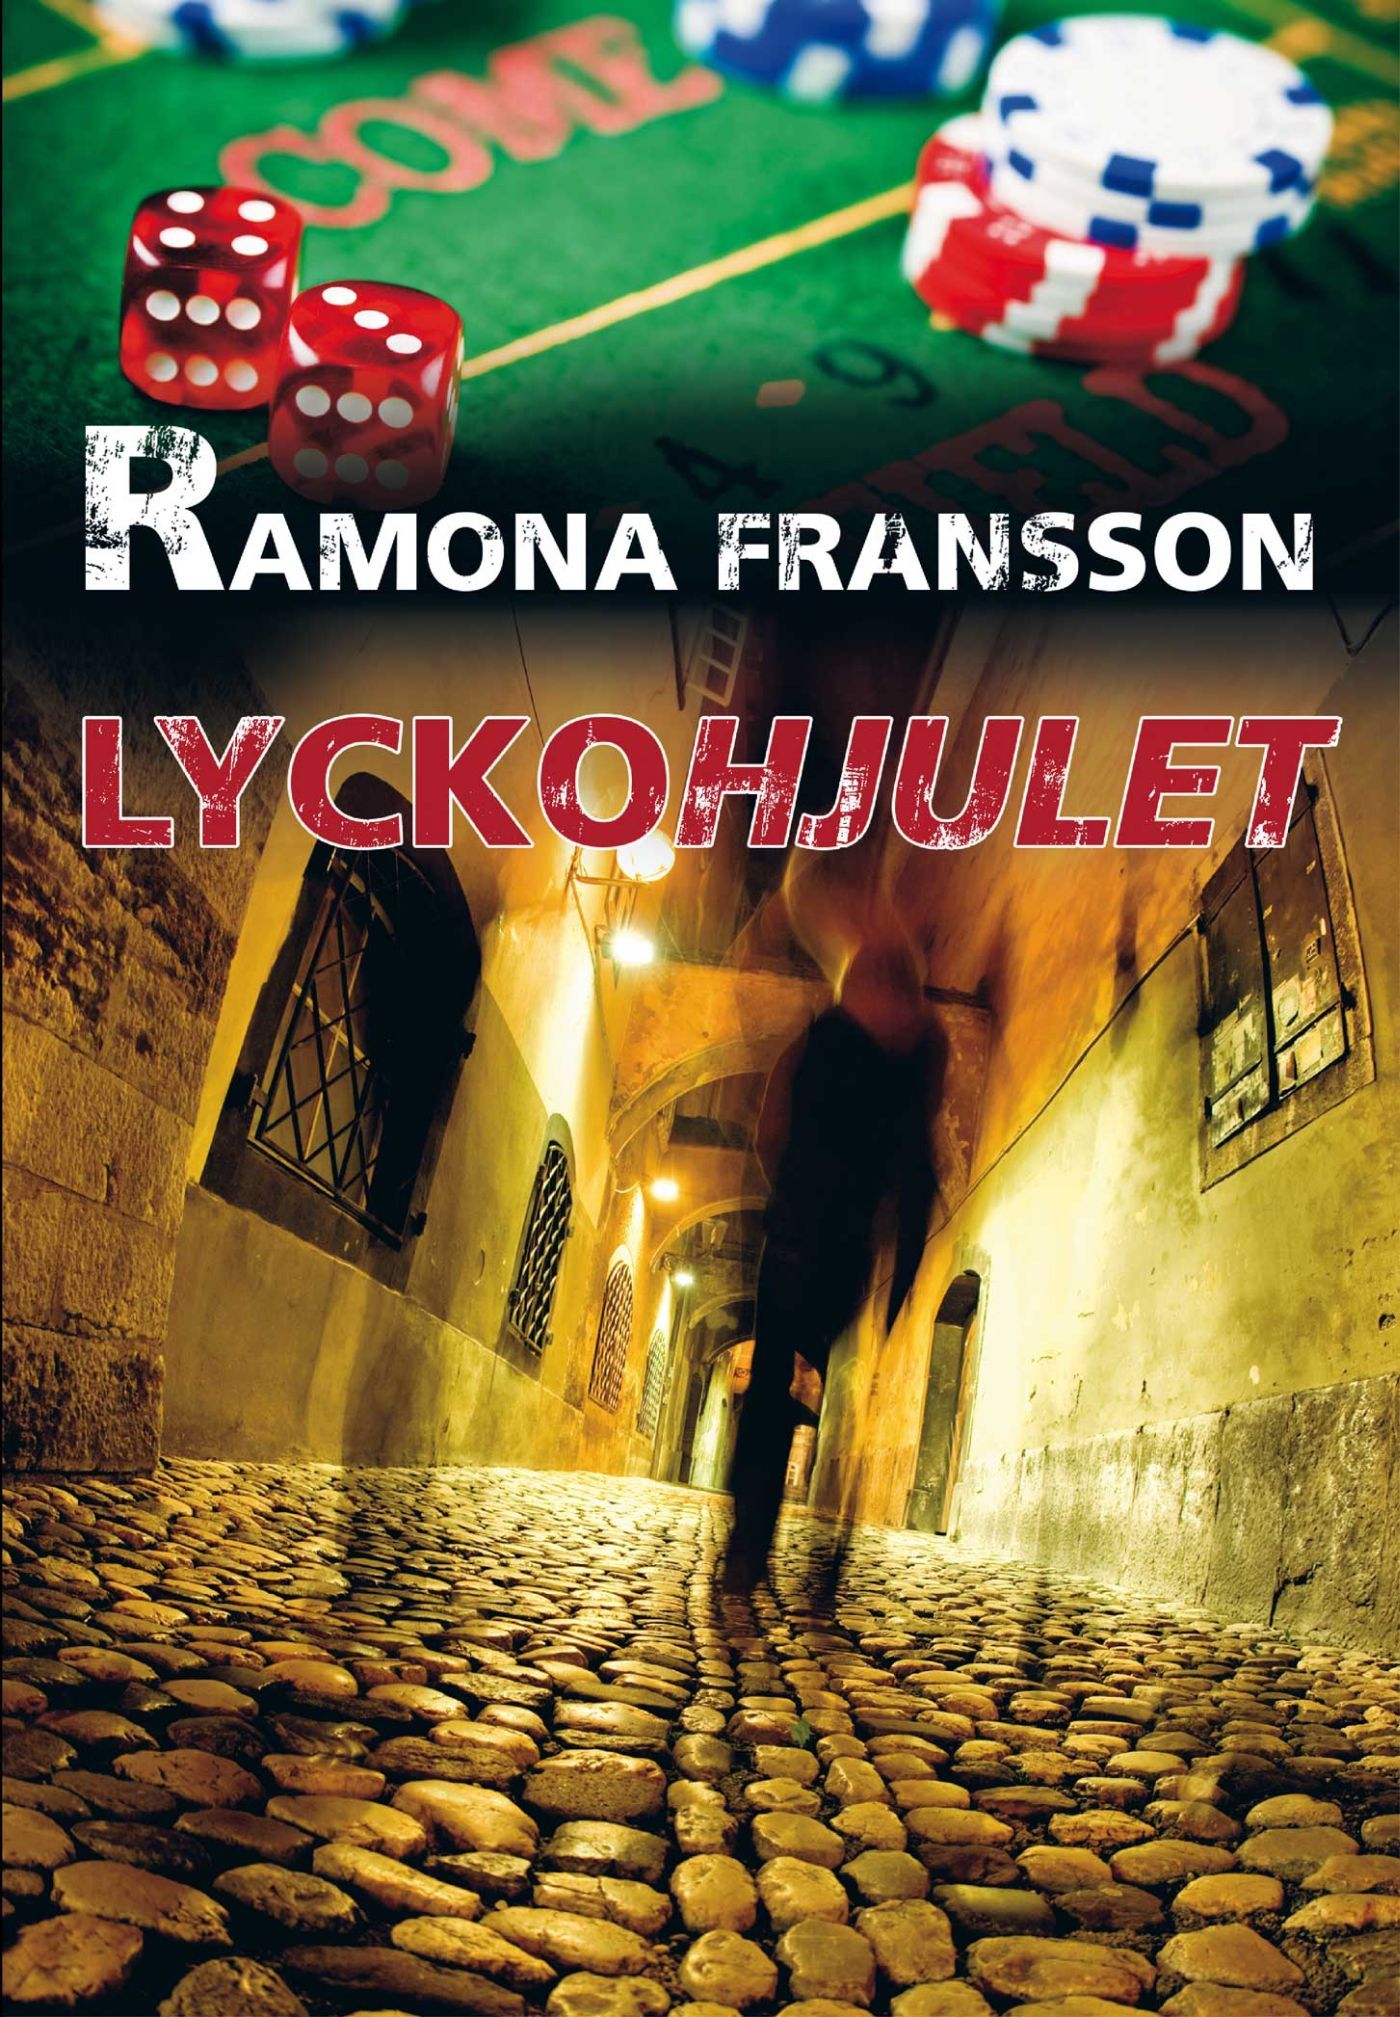 Lyckohjulet, eBook by Ramona Fransson